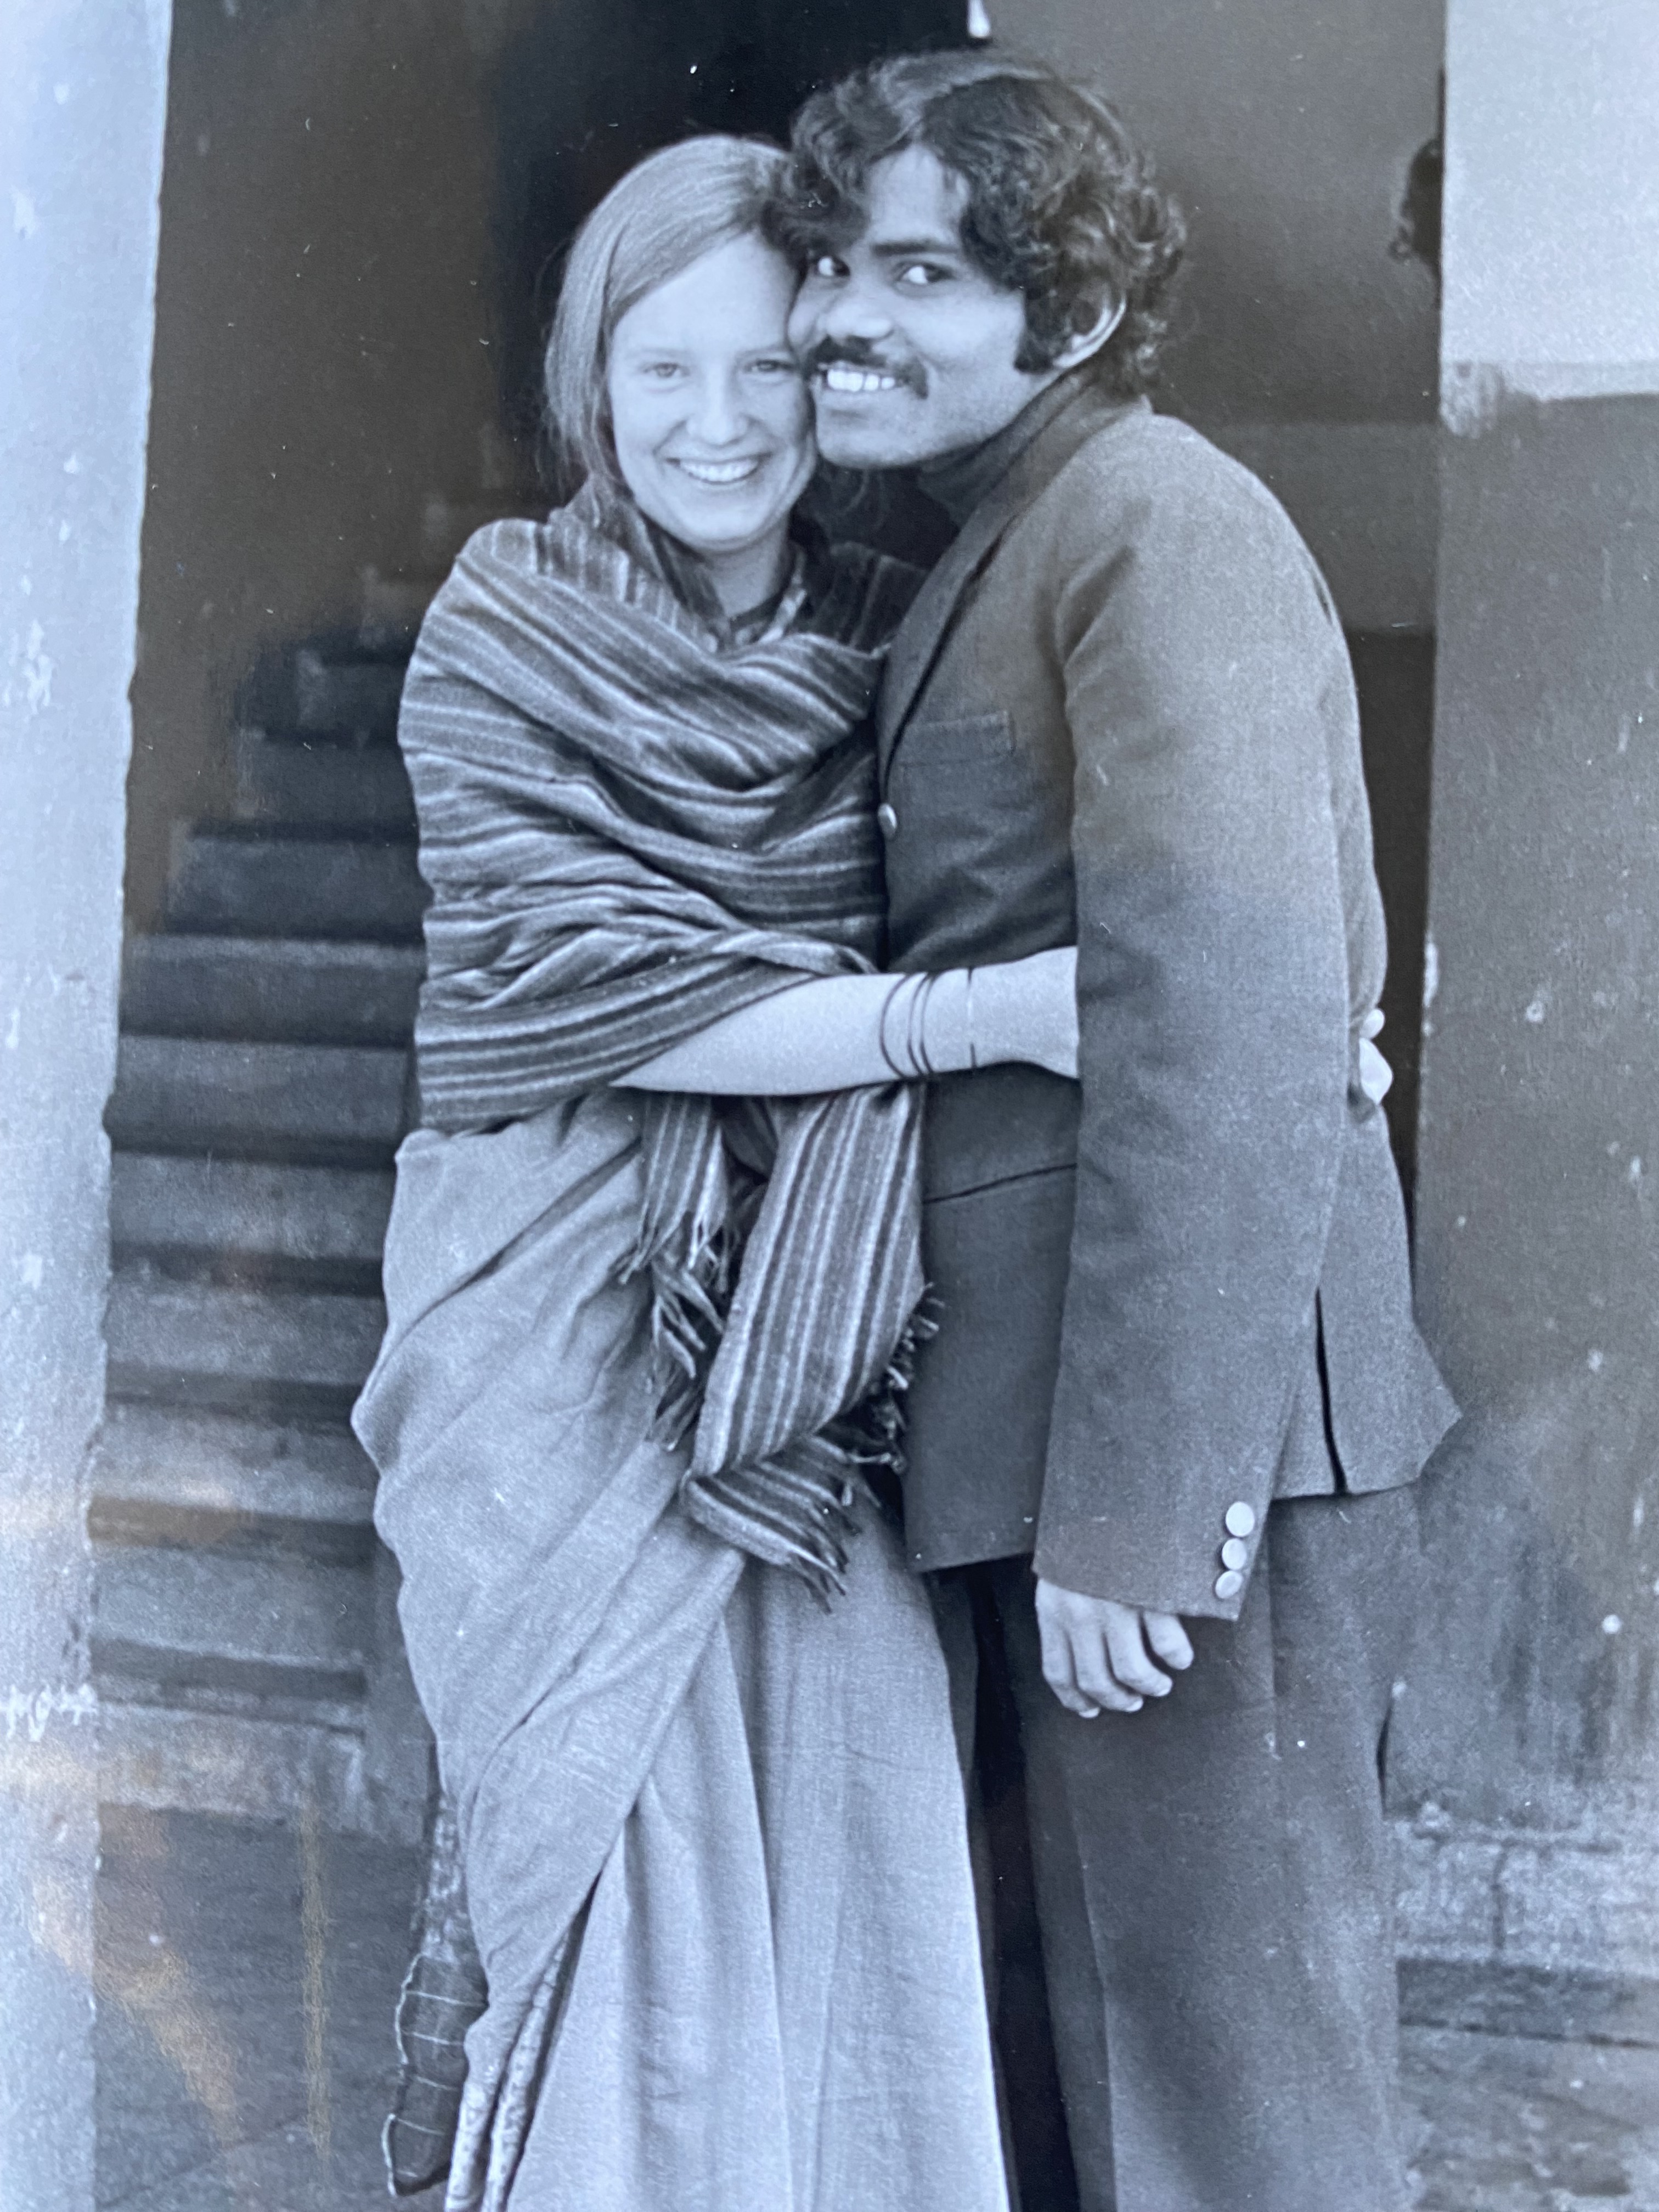 Pradyumna Kumar "PK" Mahanandia with his wife Charlotte "Lotte" Von Schedvin hugging him